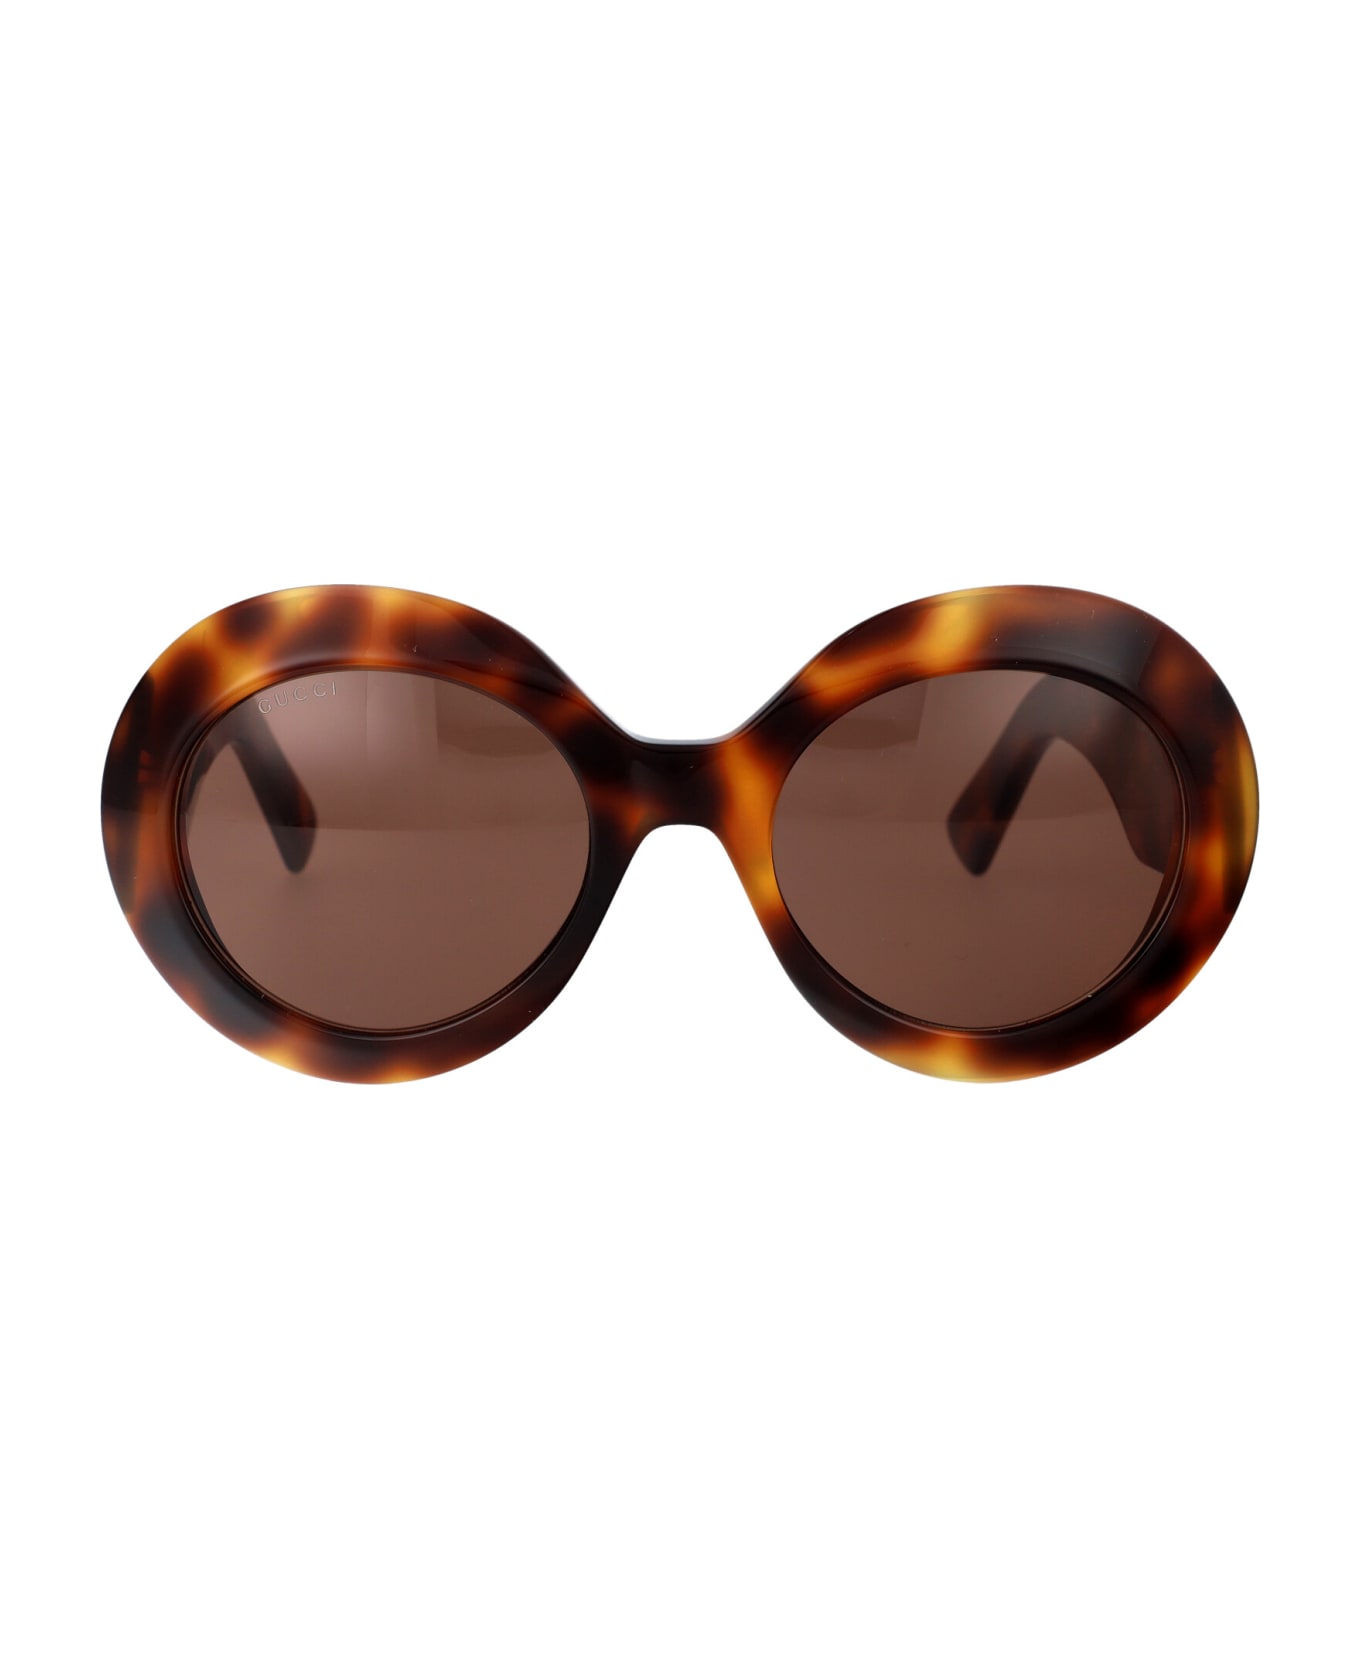 Gucci Eyewear Gg1647s Sunglasses - 009 HAVANA HAVANA BROWN